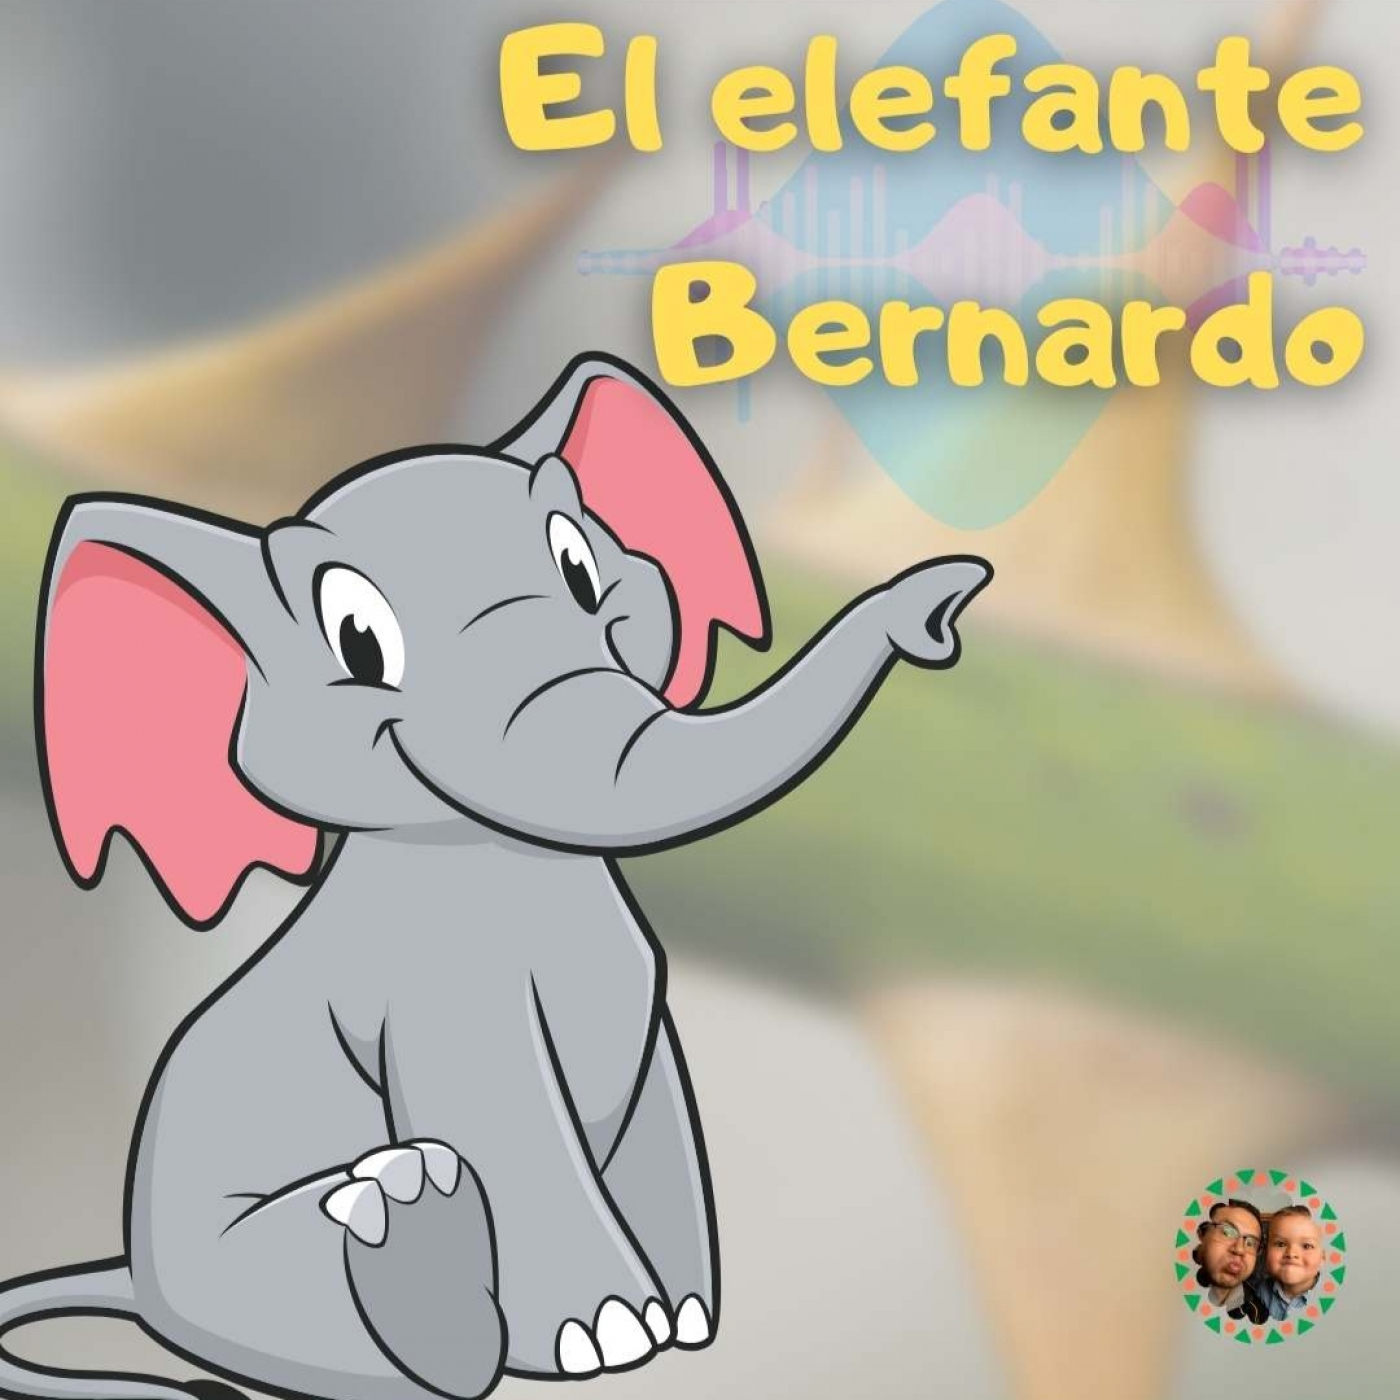 El elefante Bernardo